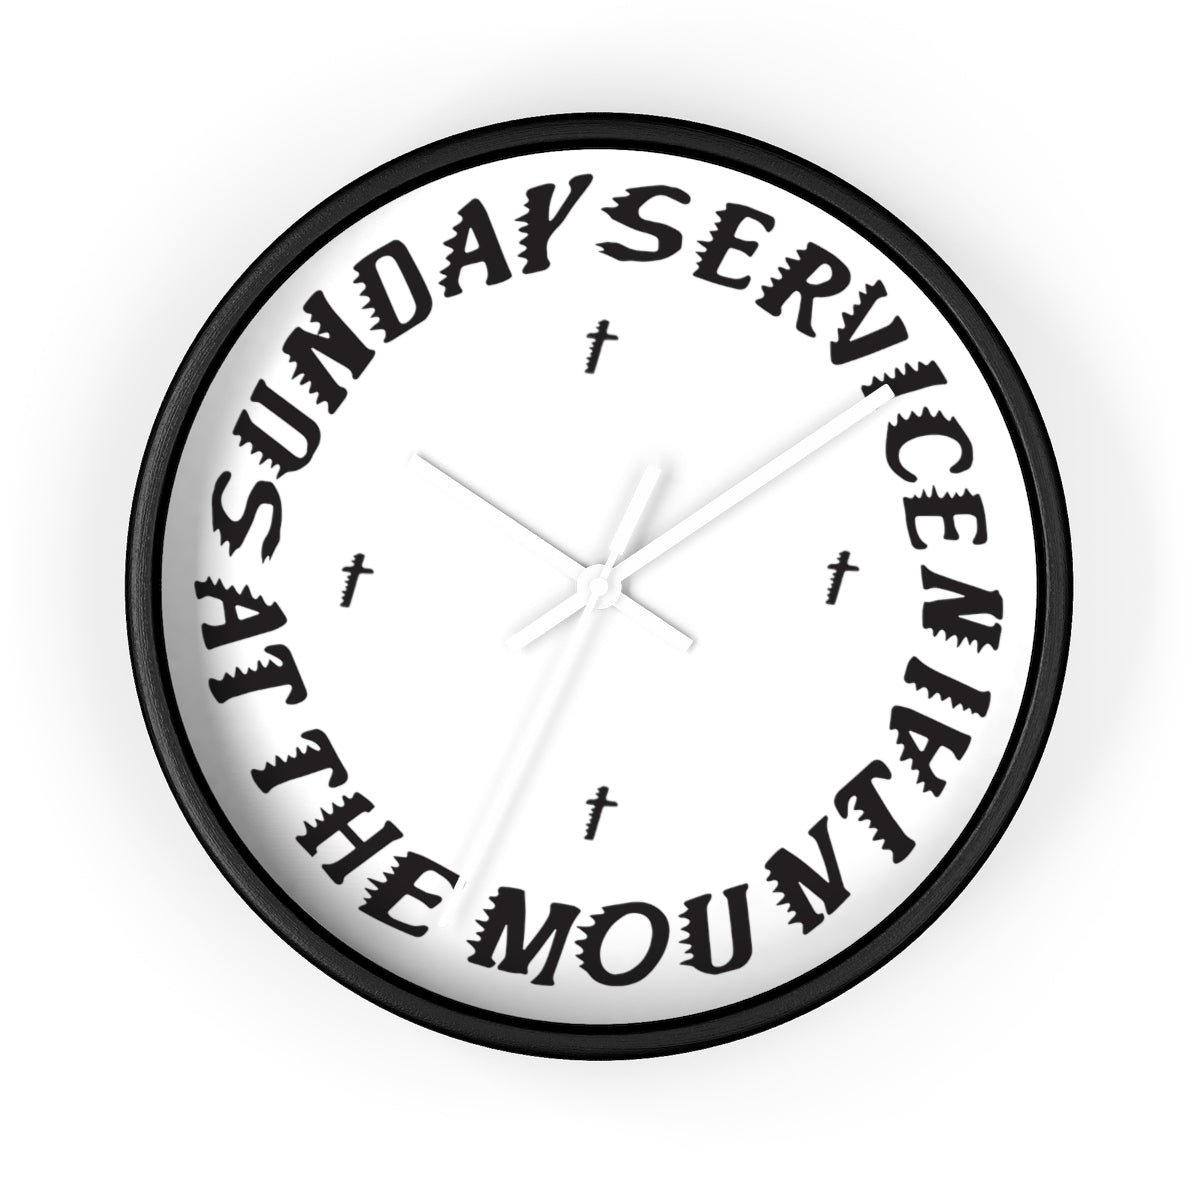 Sunday Service At The Mountain Wall clock - Kanye West Sunday Service Coachella-10 in-Black-White-Archethype